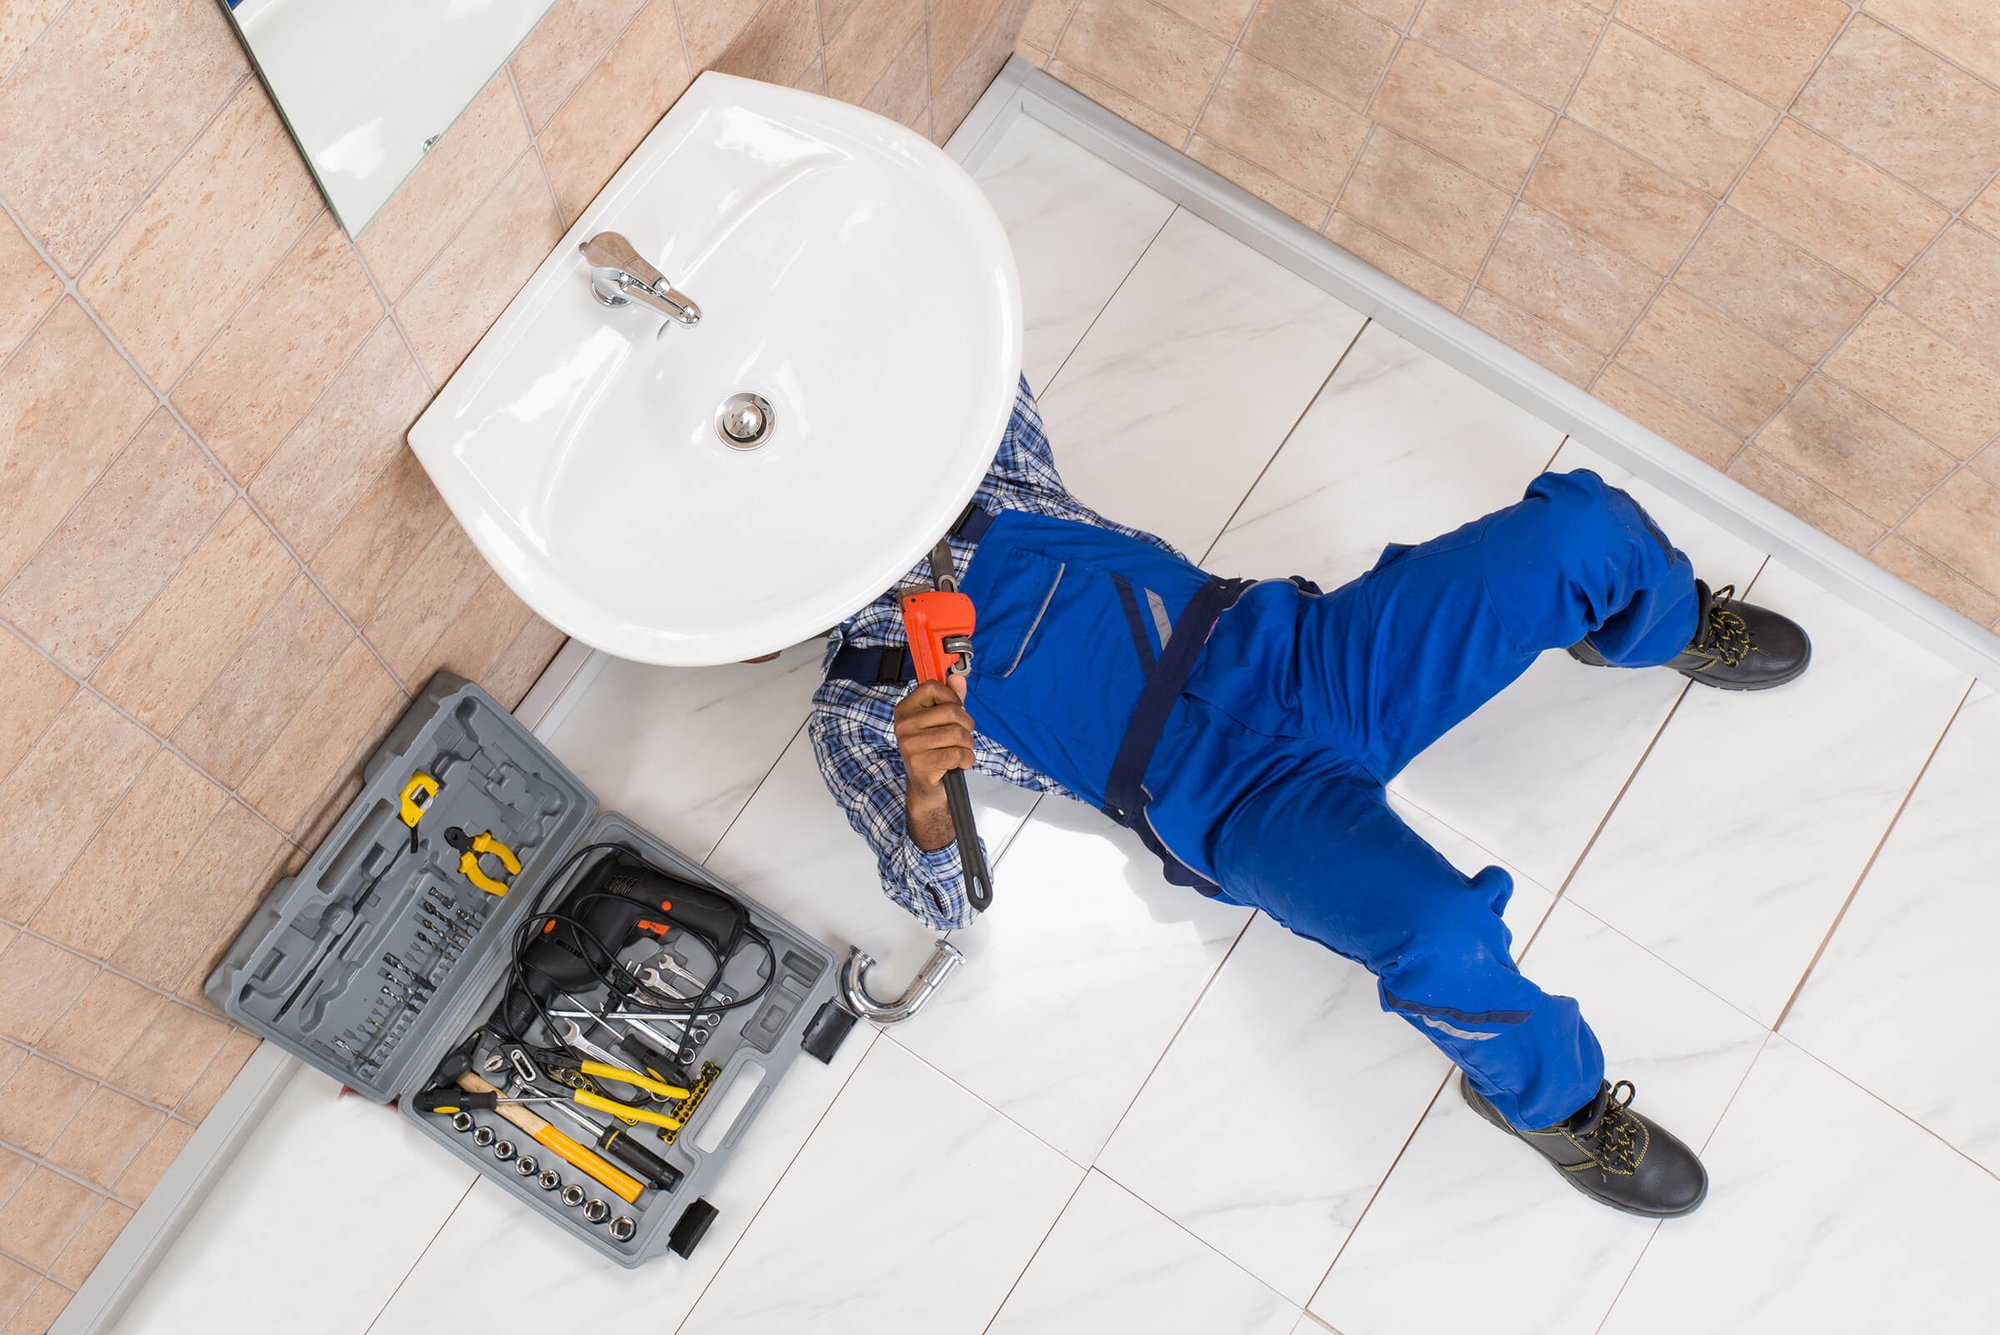 DAVACO plumber, wearing a bright blue uniform, working underneath a wall-mounted sink in a customer's bathroom.